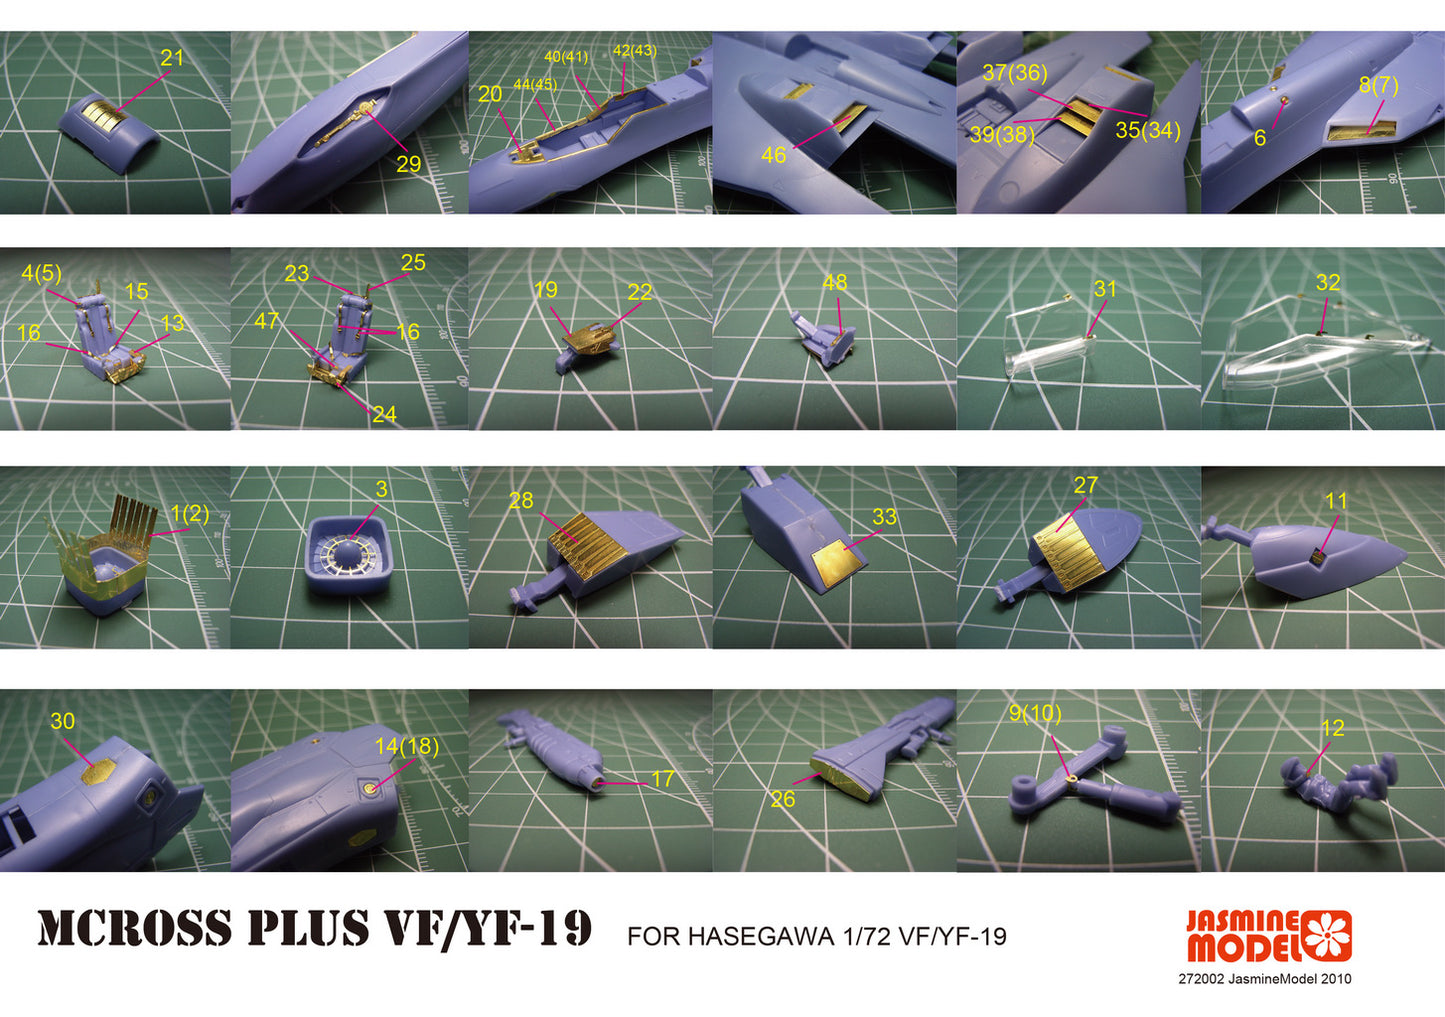 272002 PE upgrade parts for Hasegawa 1/72 MACROSS PLUS YF/VF-19